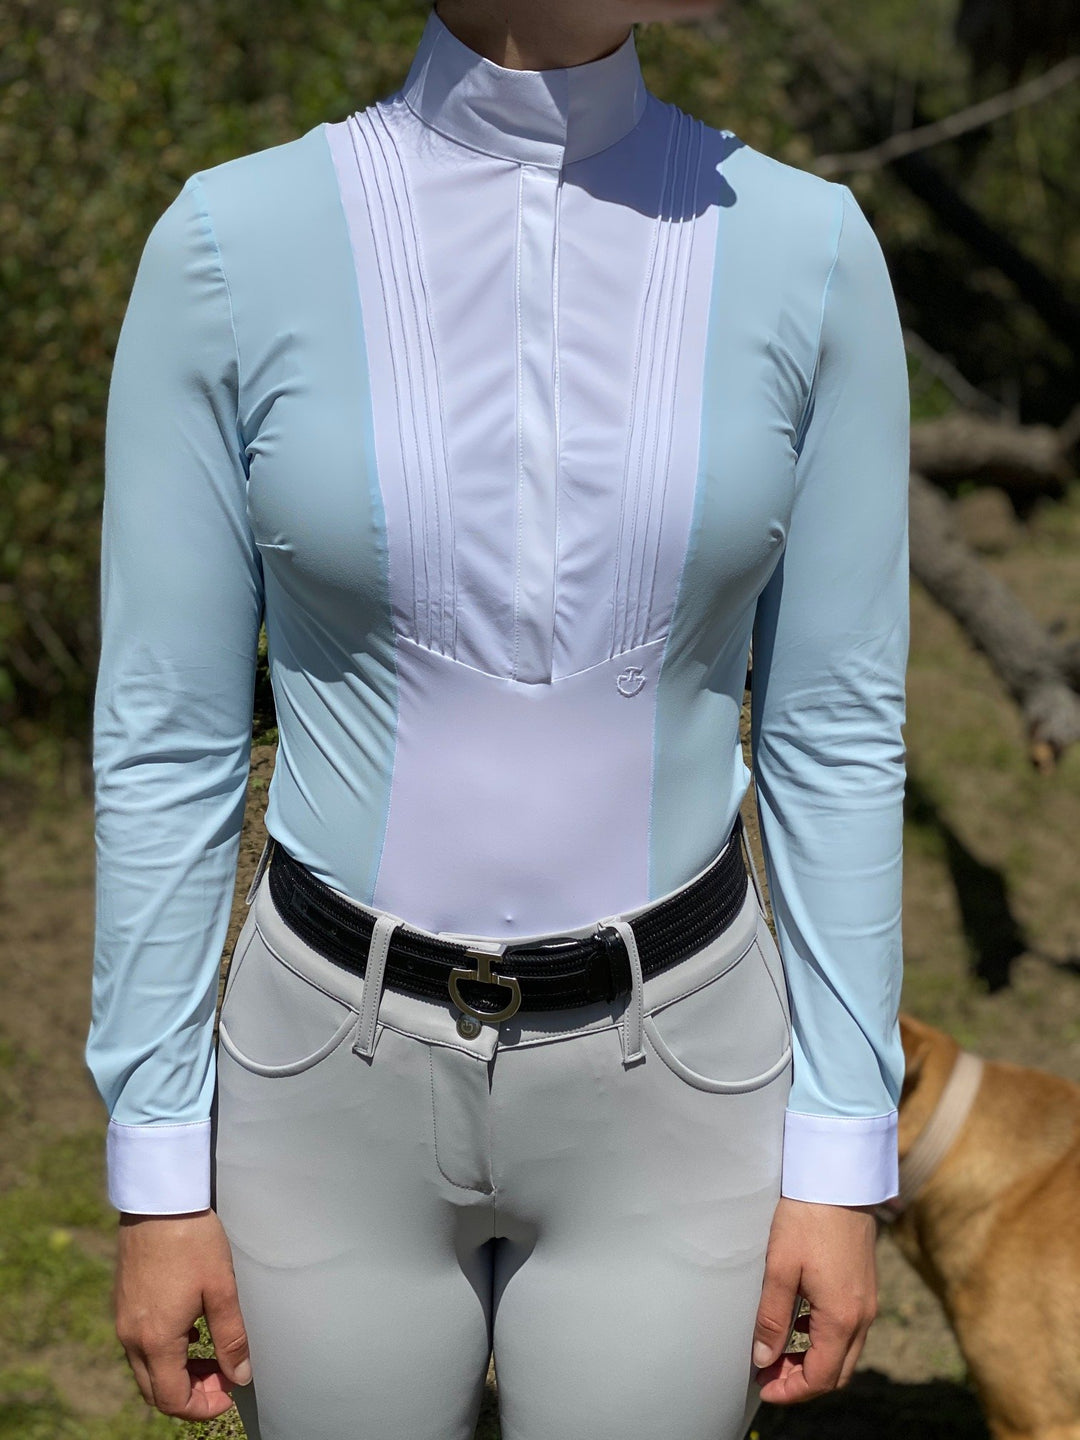 Cavalleria Toscana American Long Sleeve Show Shirt - New!